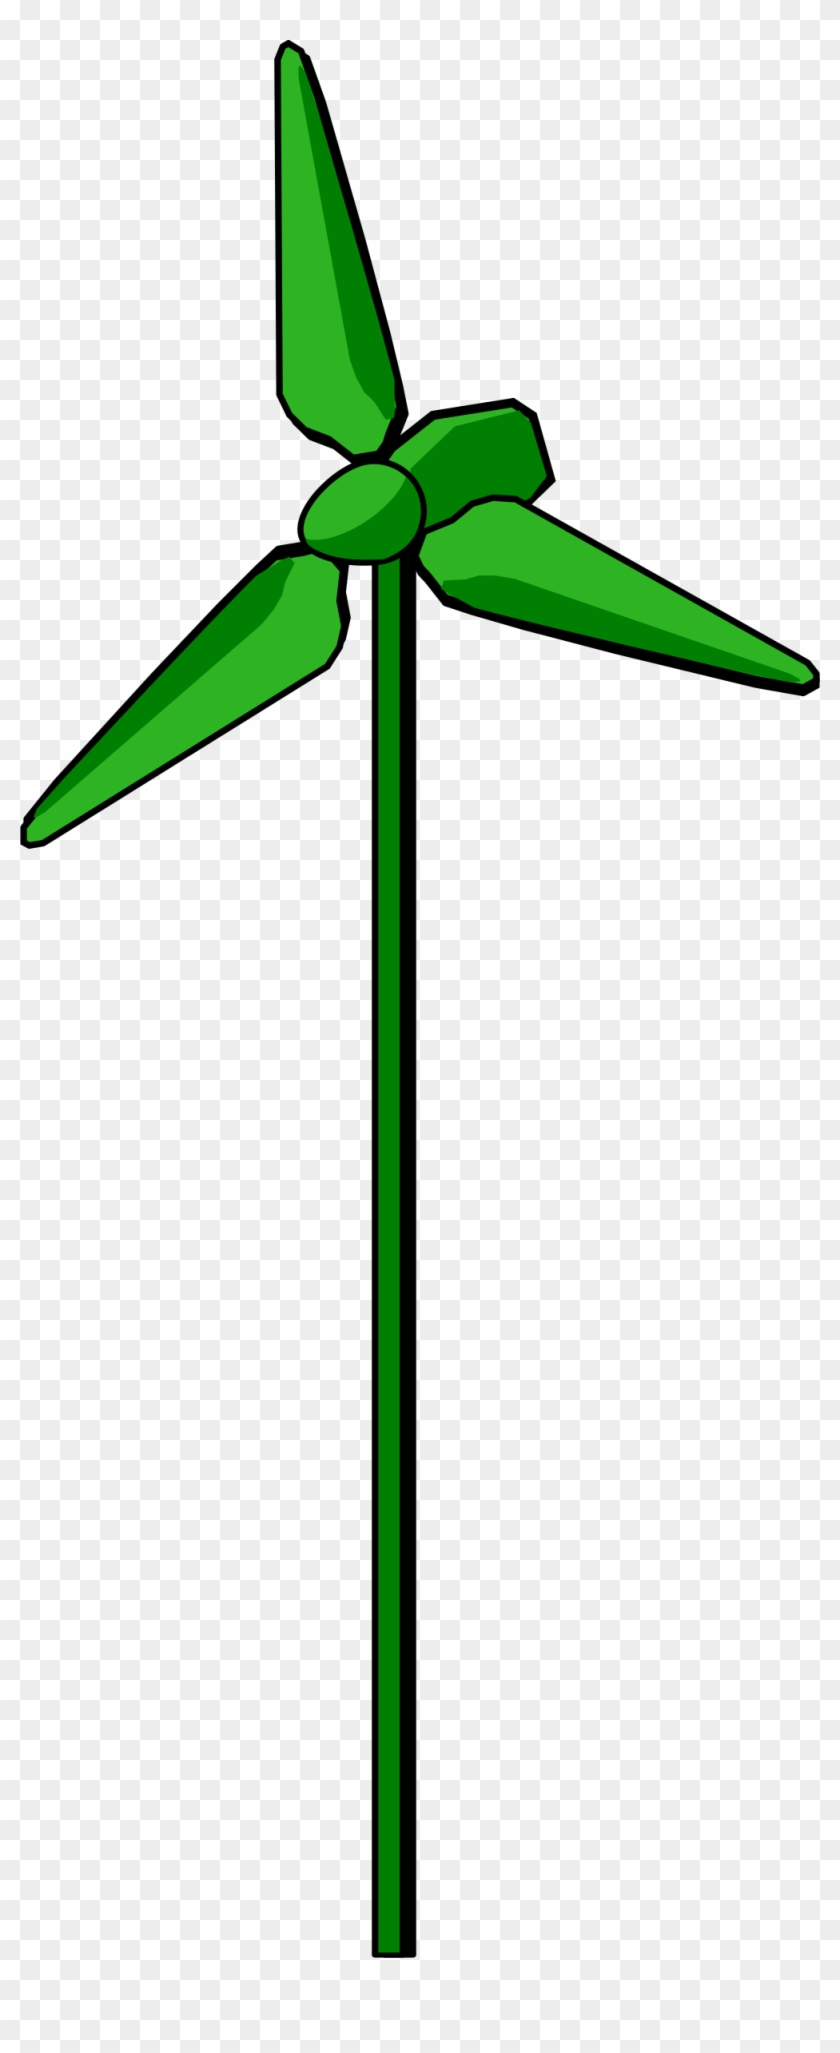 Free Vector Energy Positive Wind Turbine Green Clip - Moving Wind Turbine Animation #15843